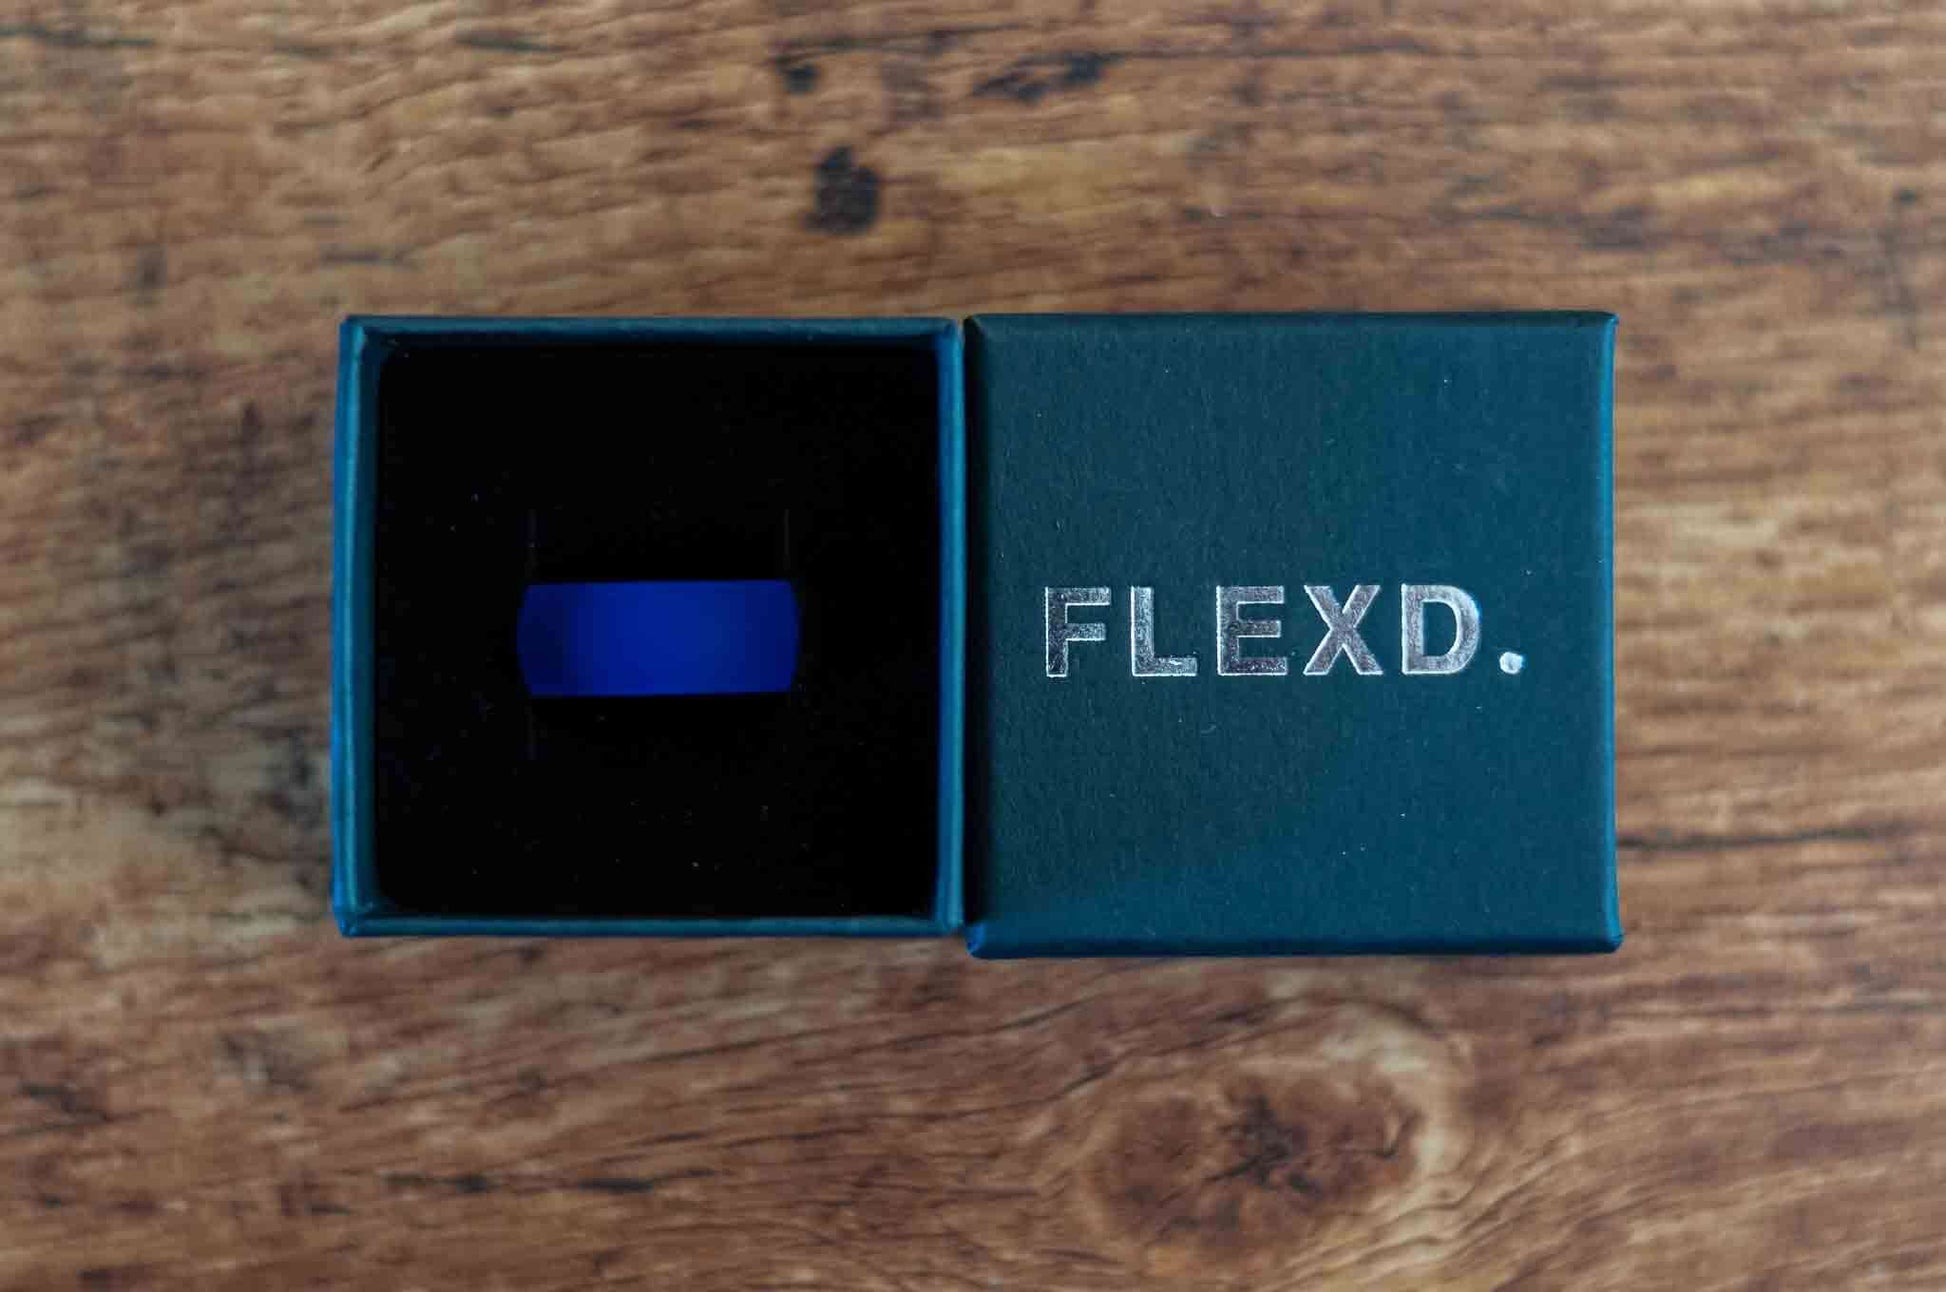 Heren Siliconen Ring - Donkerblauw - FLEXD.